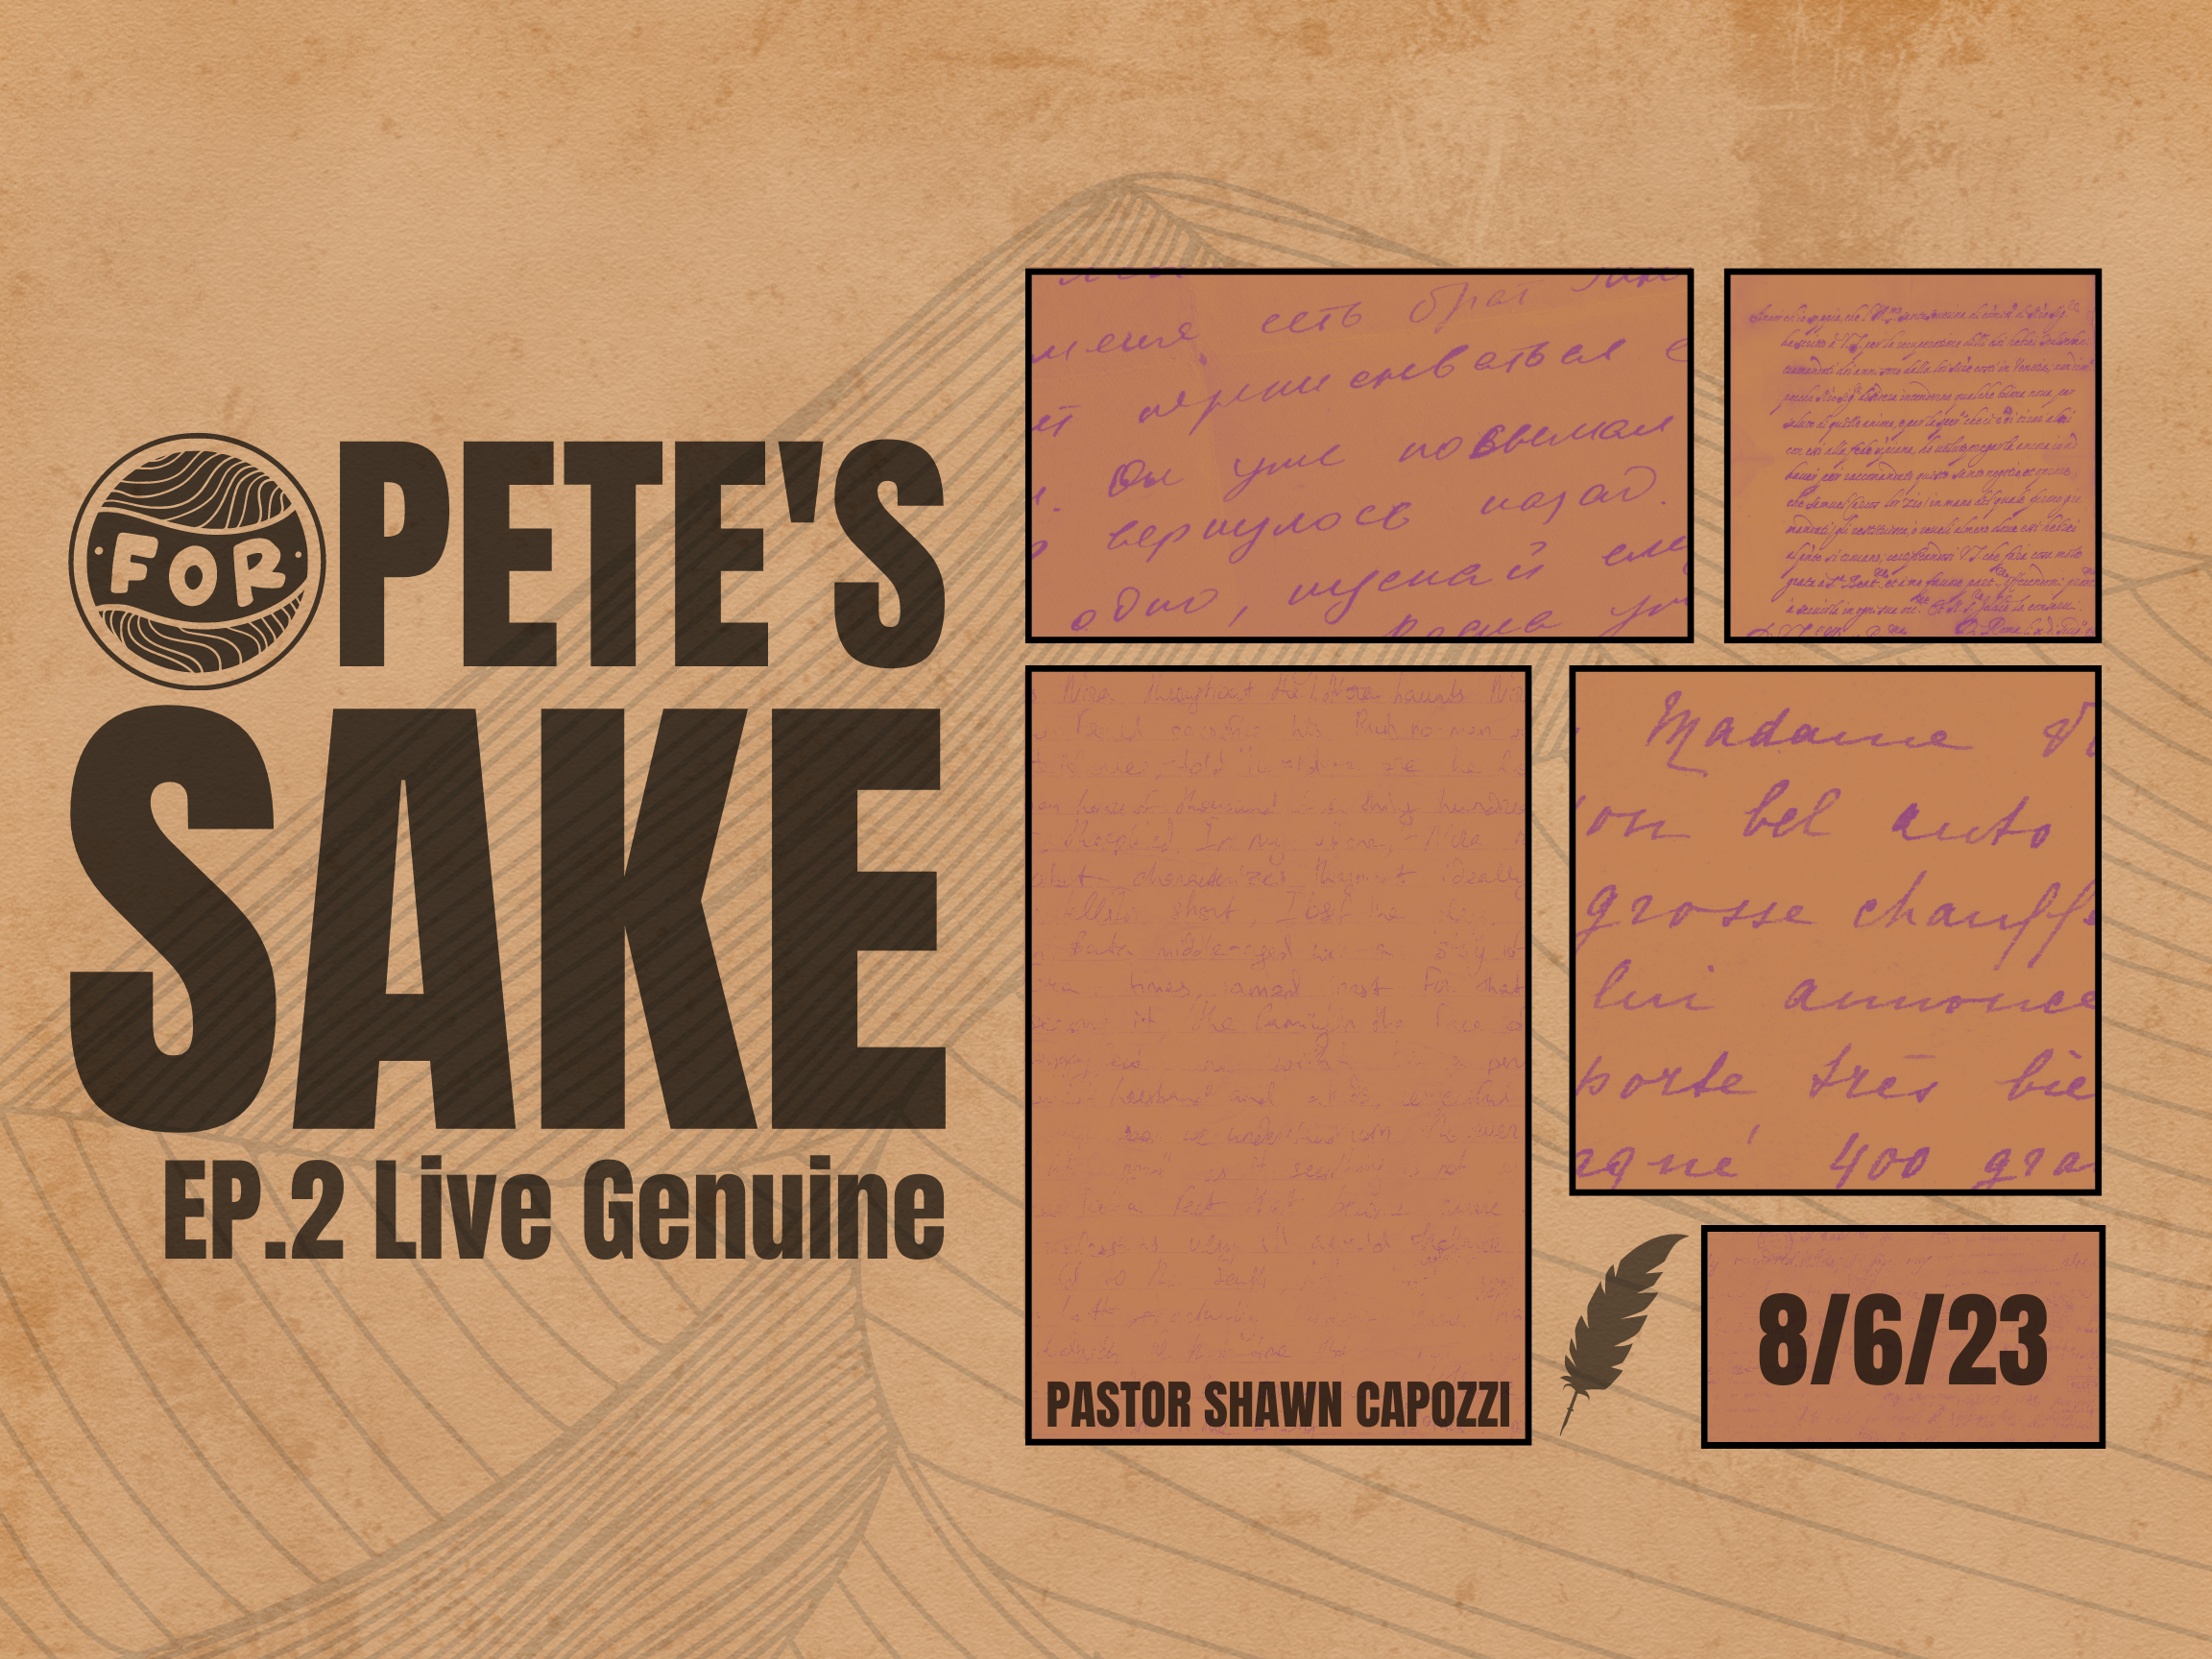 For Pete's Sake - Live Genuine